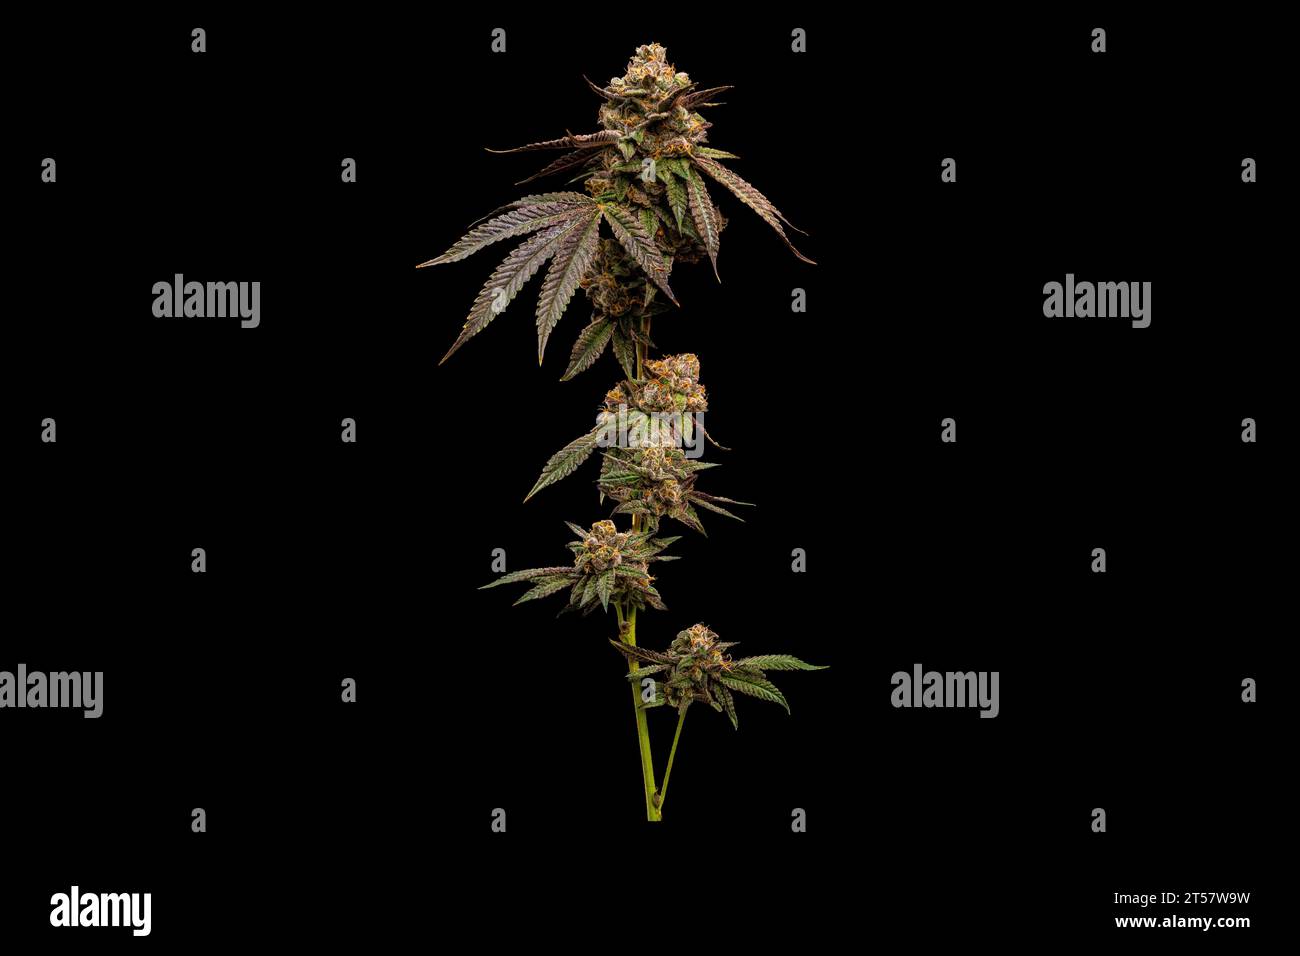 Runtz - Live Cannabis Plant Full Arm On Black Background Stock Photo